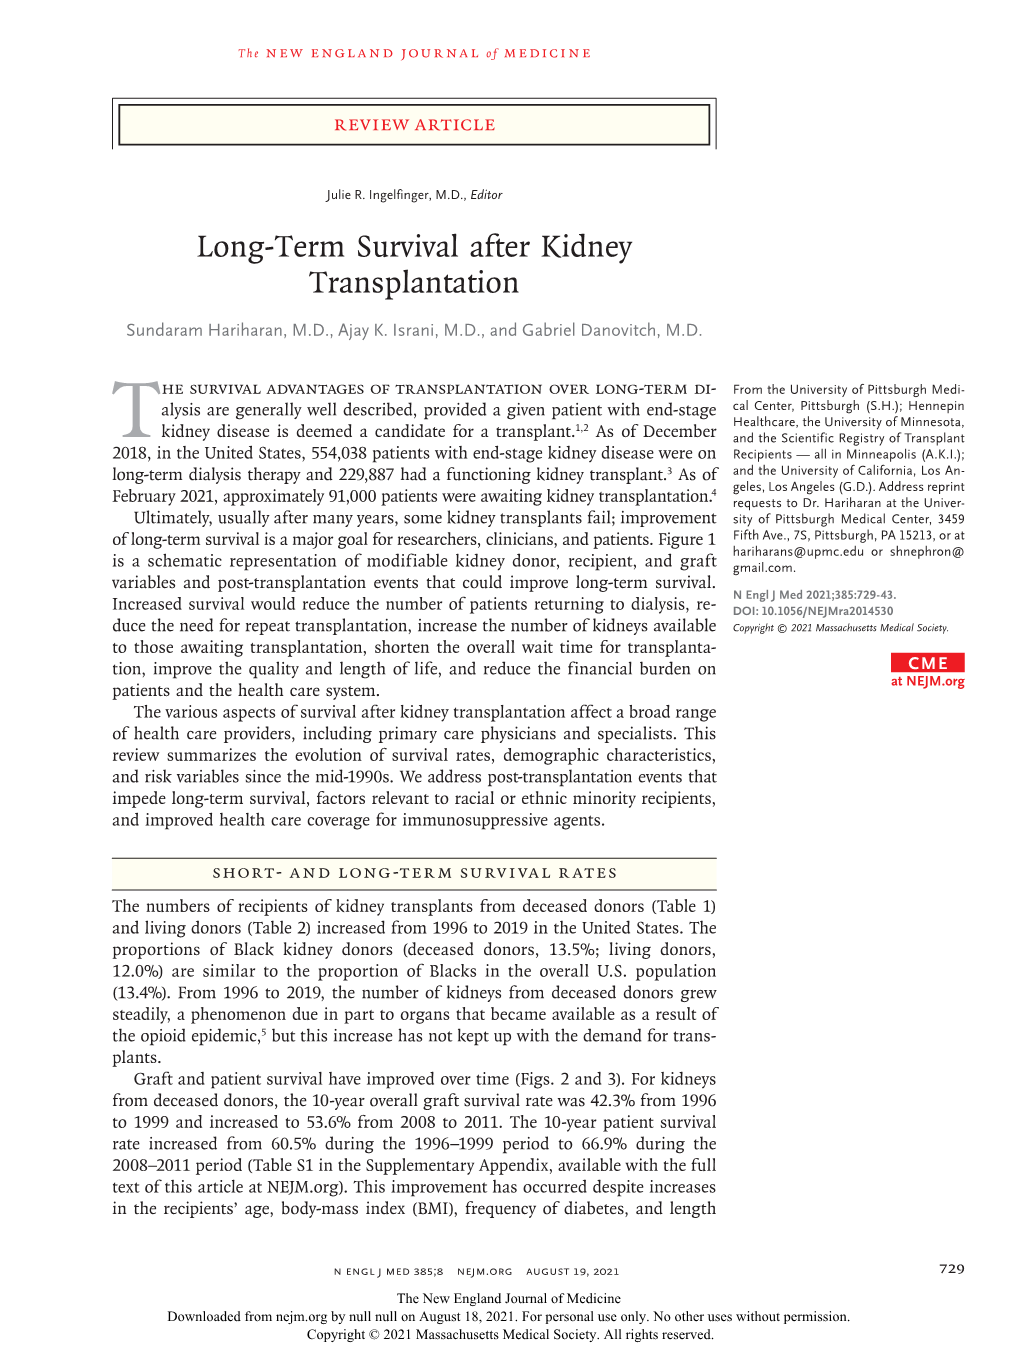 Long-Term Survival After Kidney Transplantation